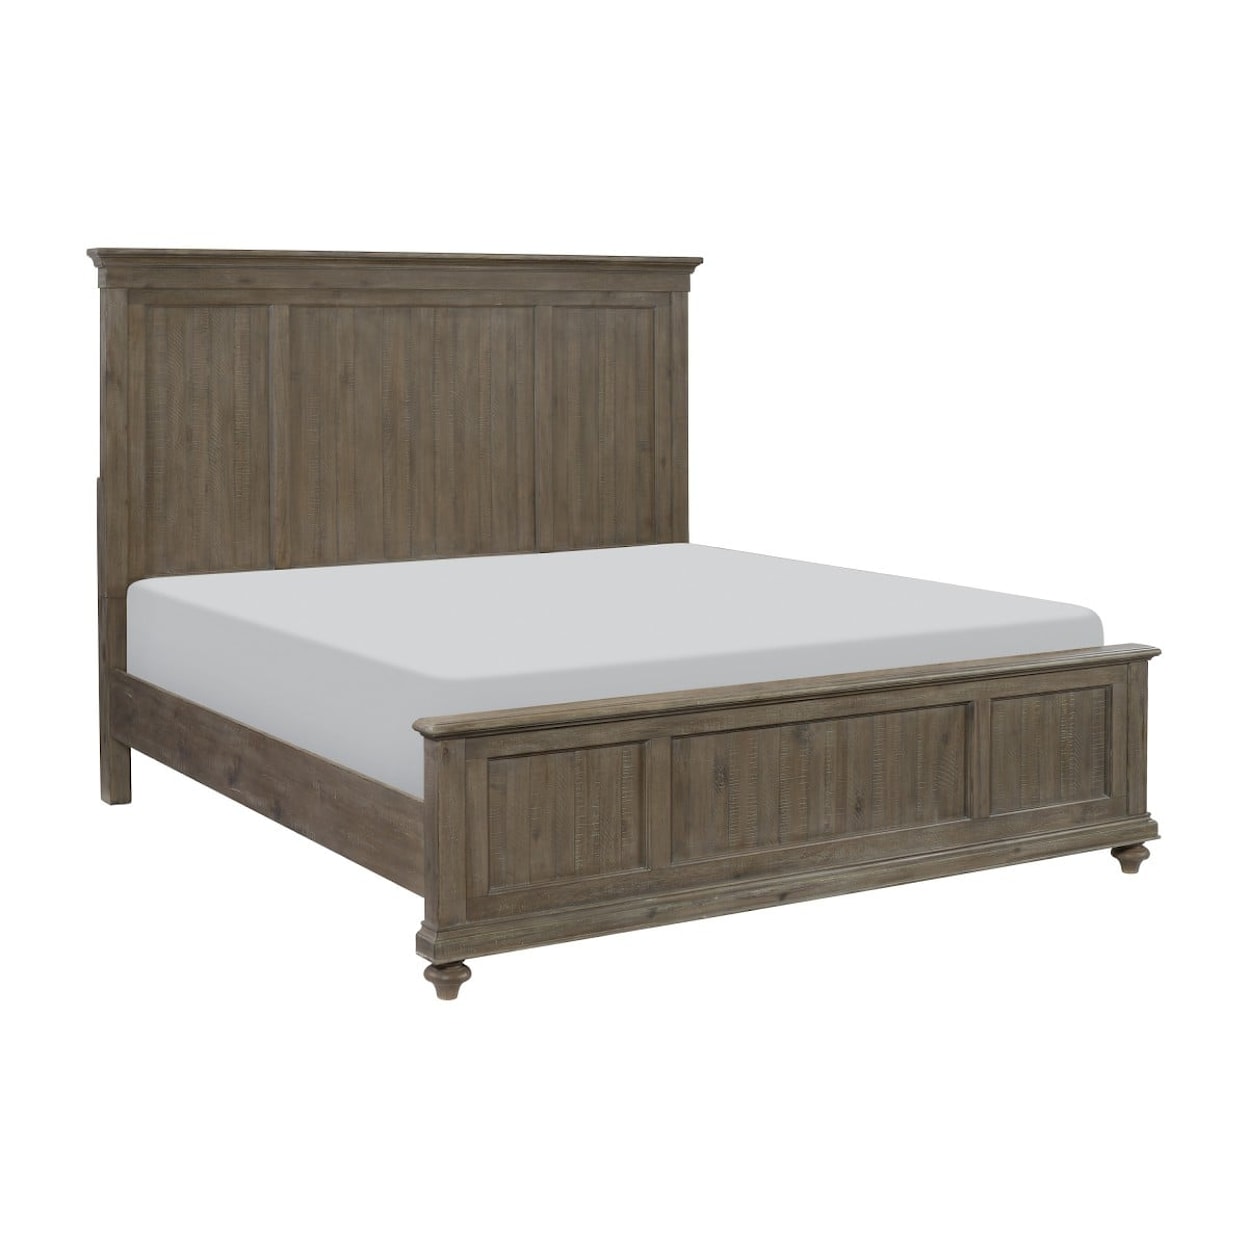 Homelegance Furniture Cardano King Bed